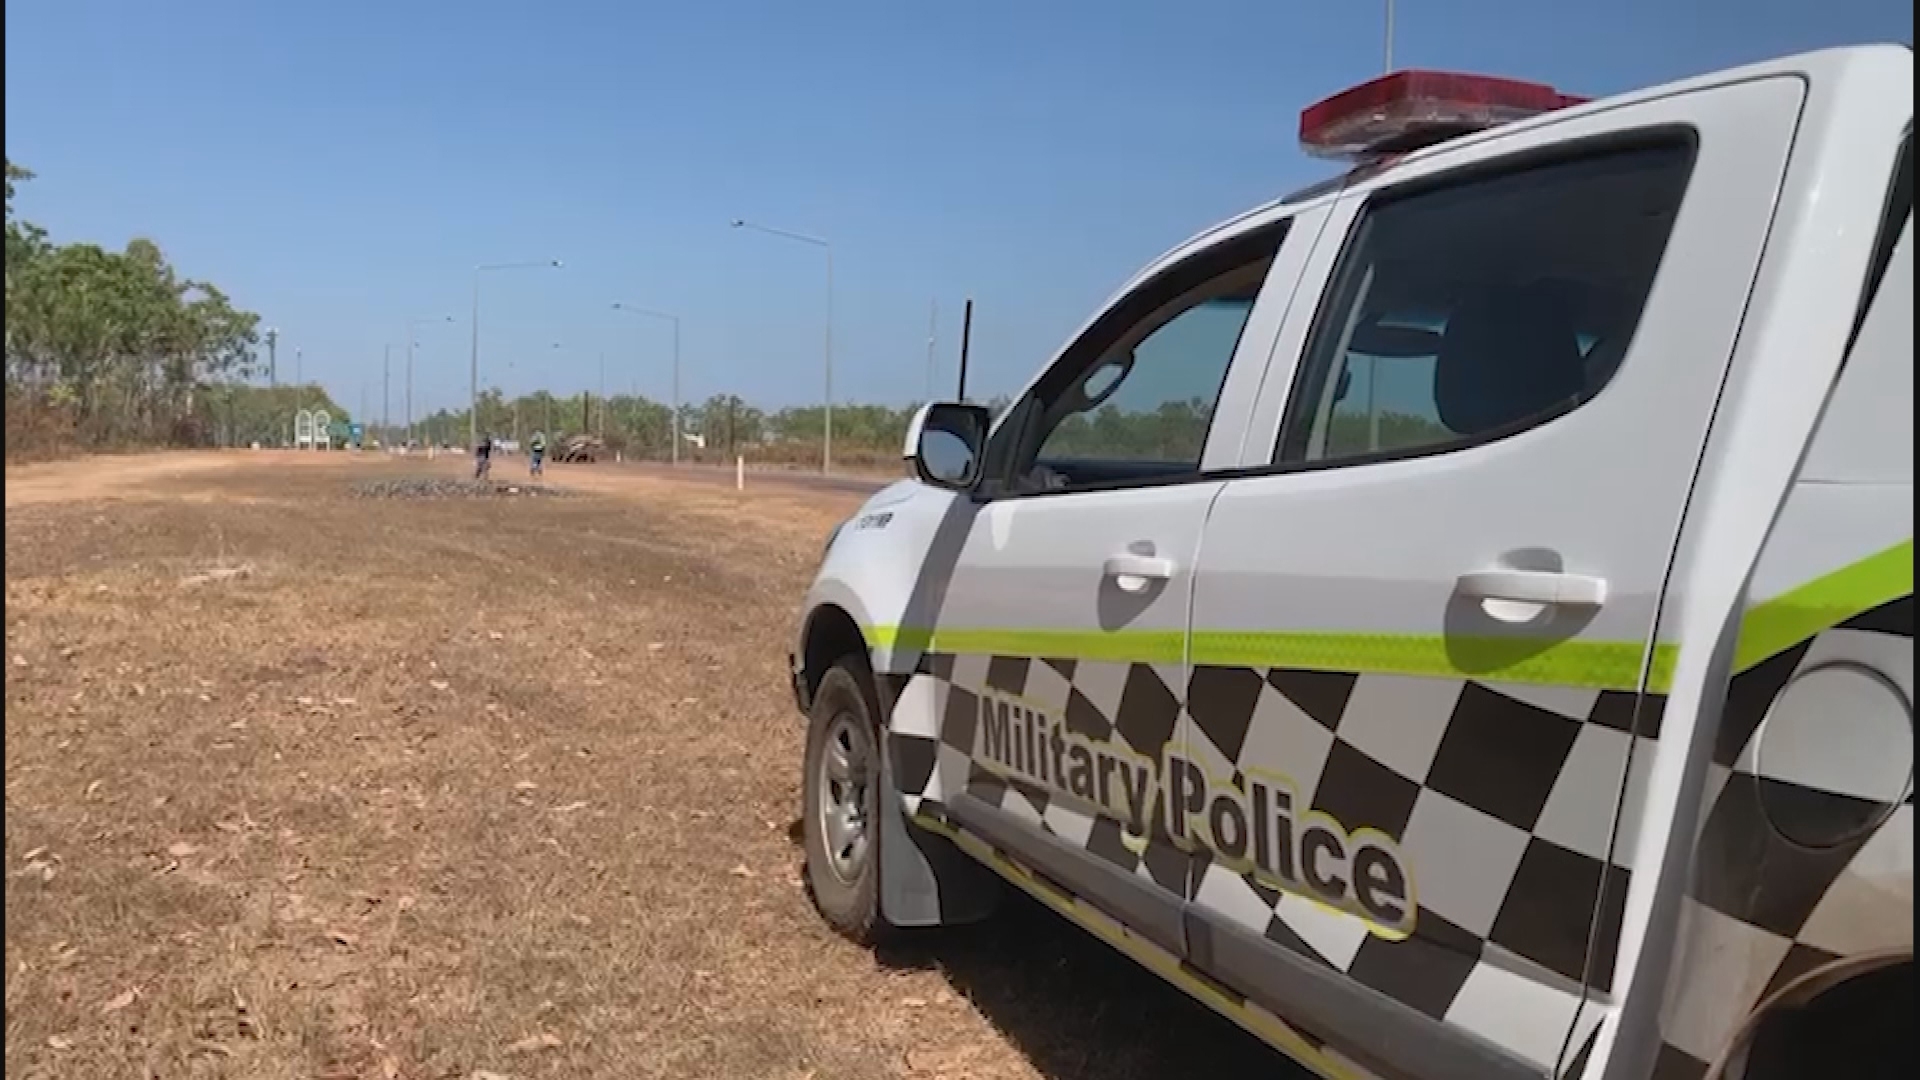 NT military police at the scene of a crash in Howard Springs, Darwin.